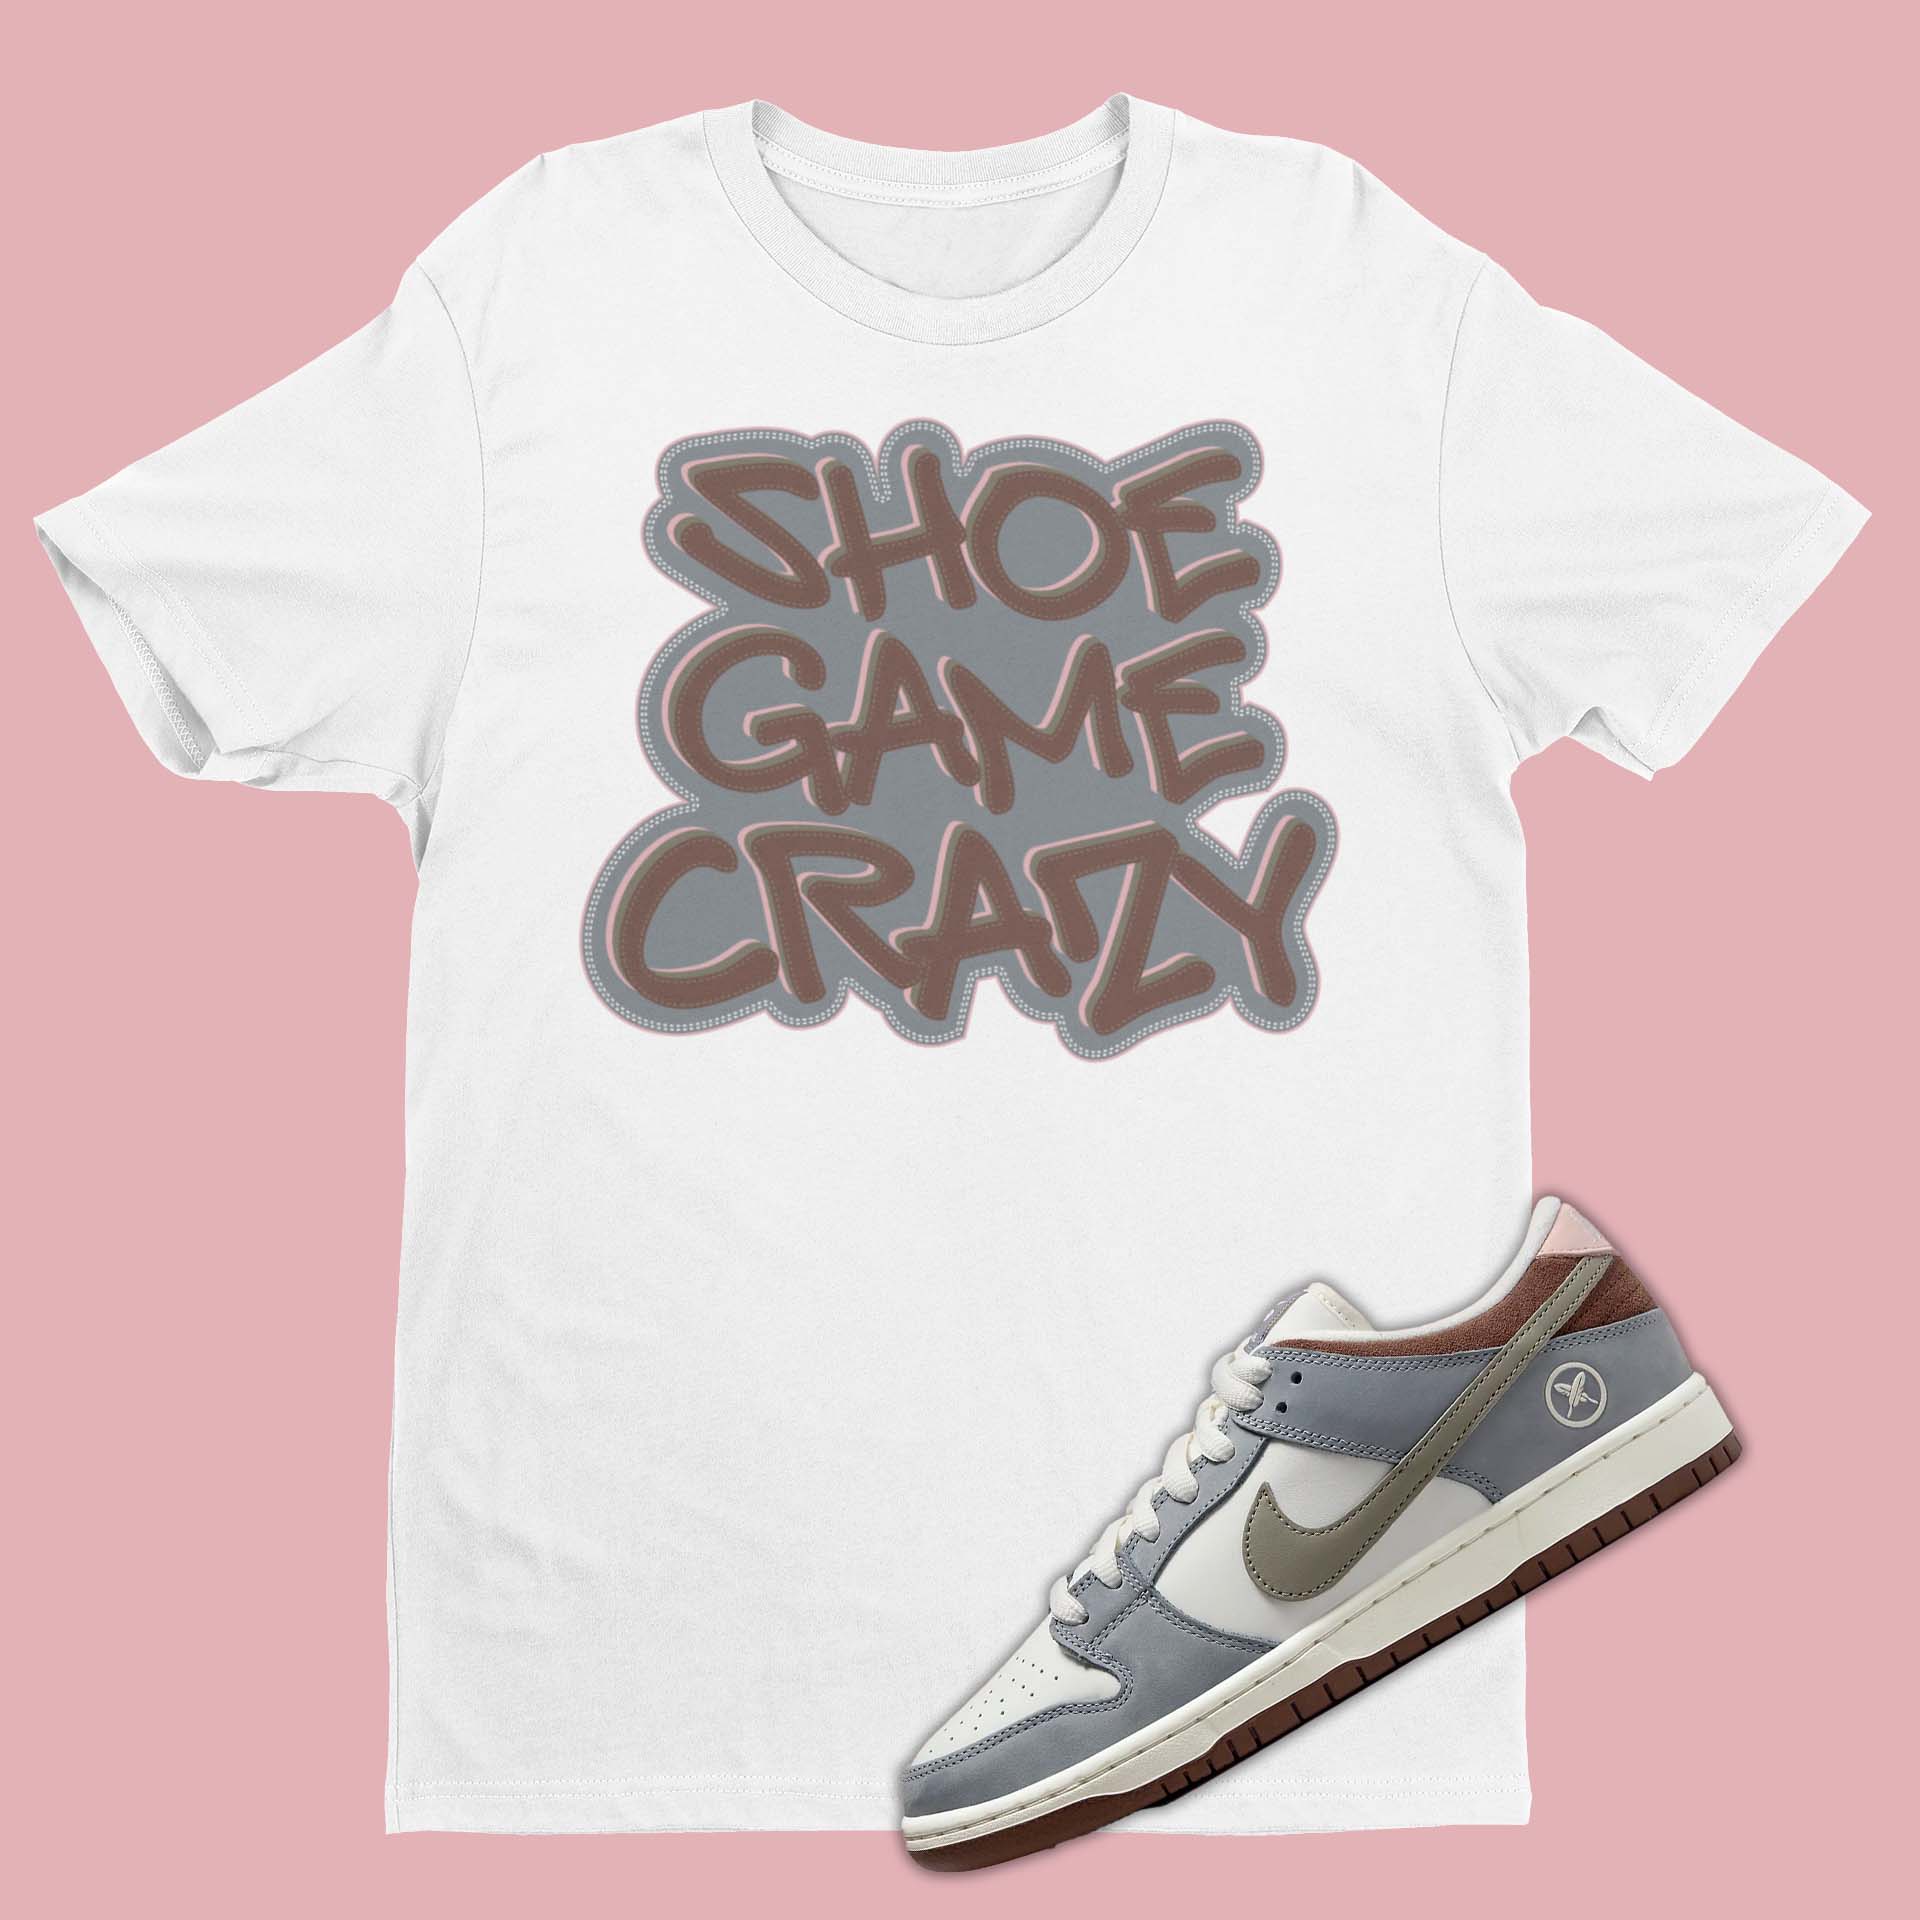 Nike Yuto Horigome Dunk Matching T-Shirt | Shoe Game Crazy Tee | SNKADX ...